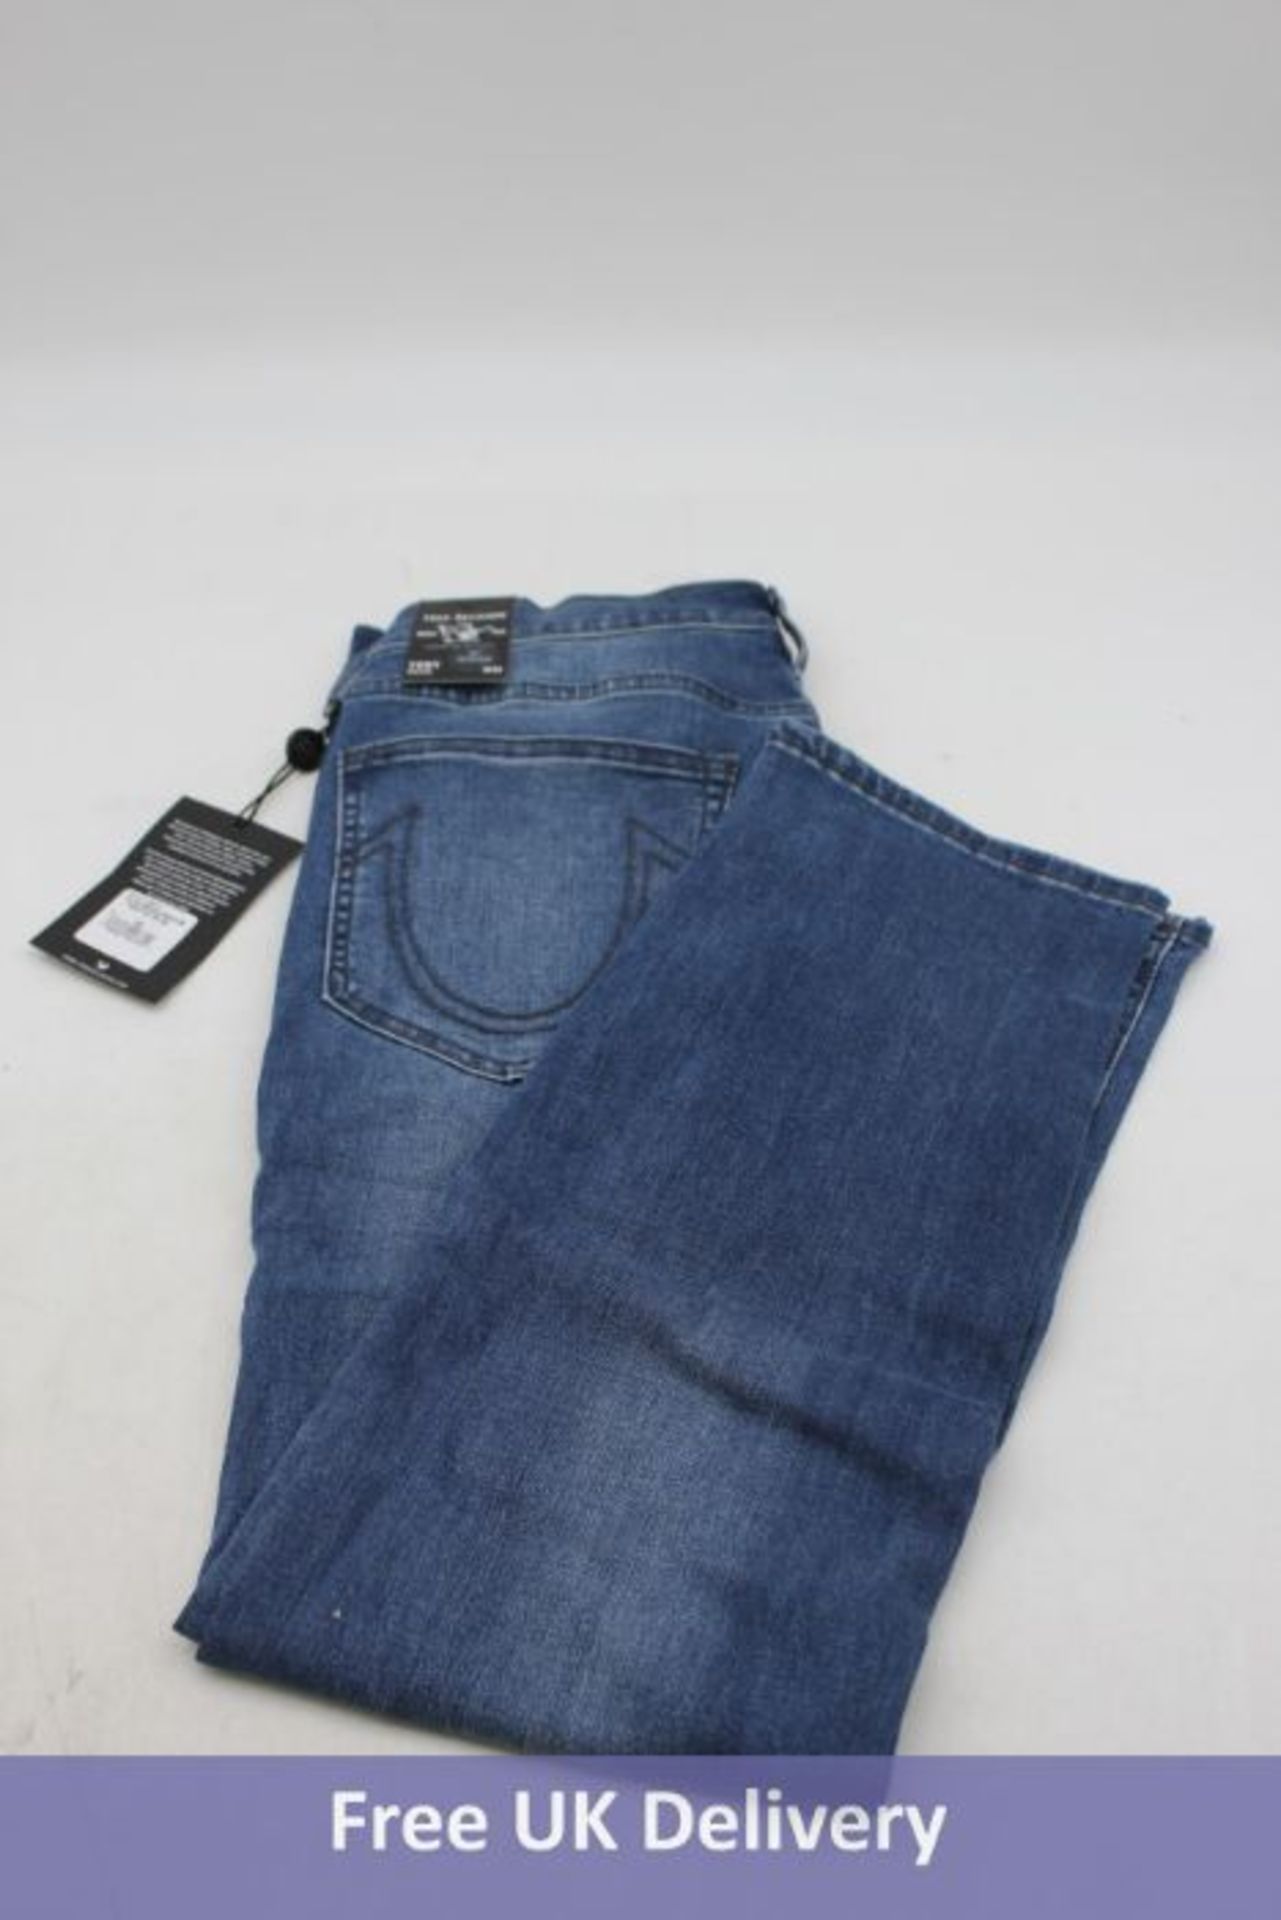 Two True Religion Men's Tony Skinny Jeans Medium Disruption, Size 32 - Image 2 of 2